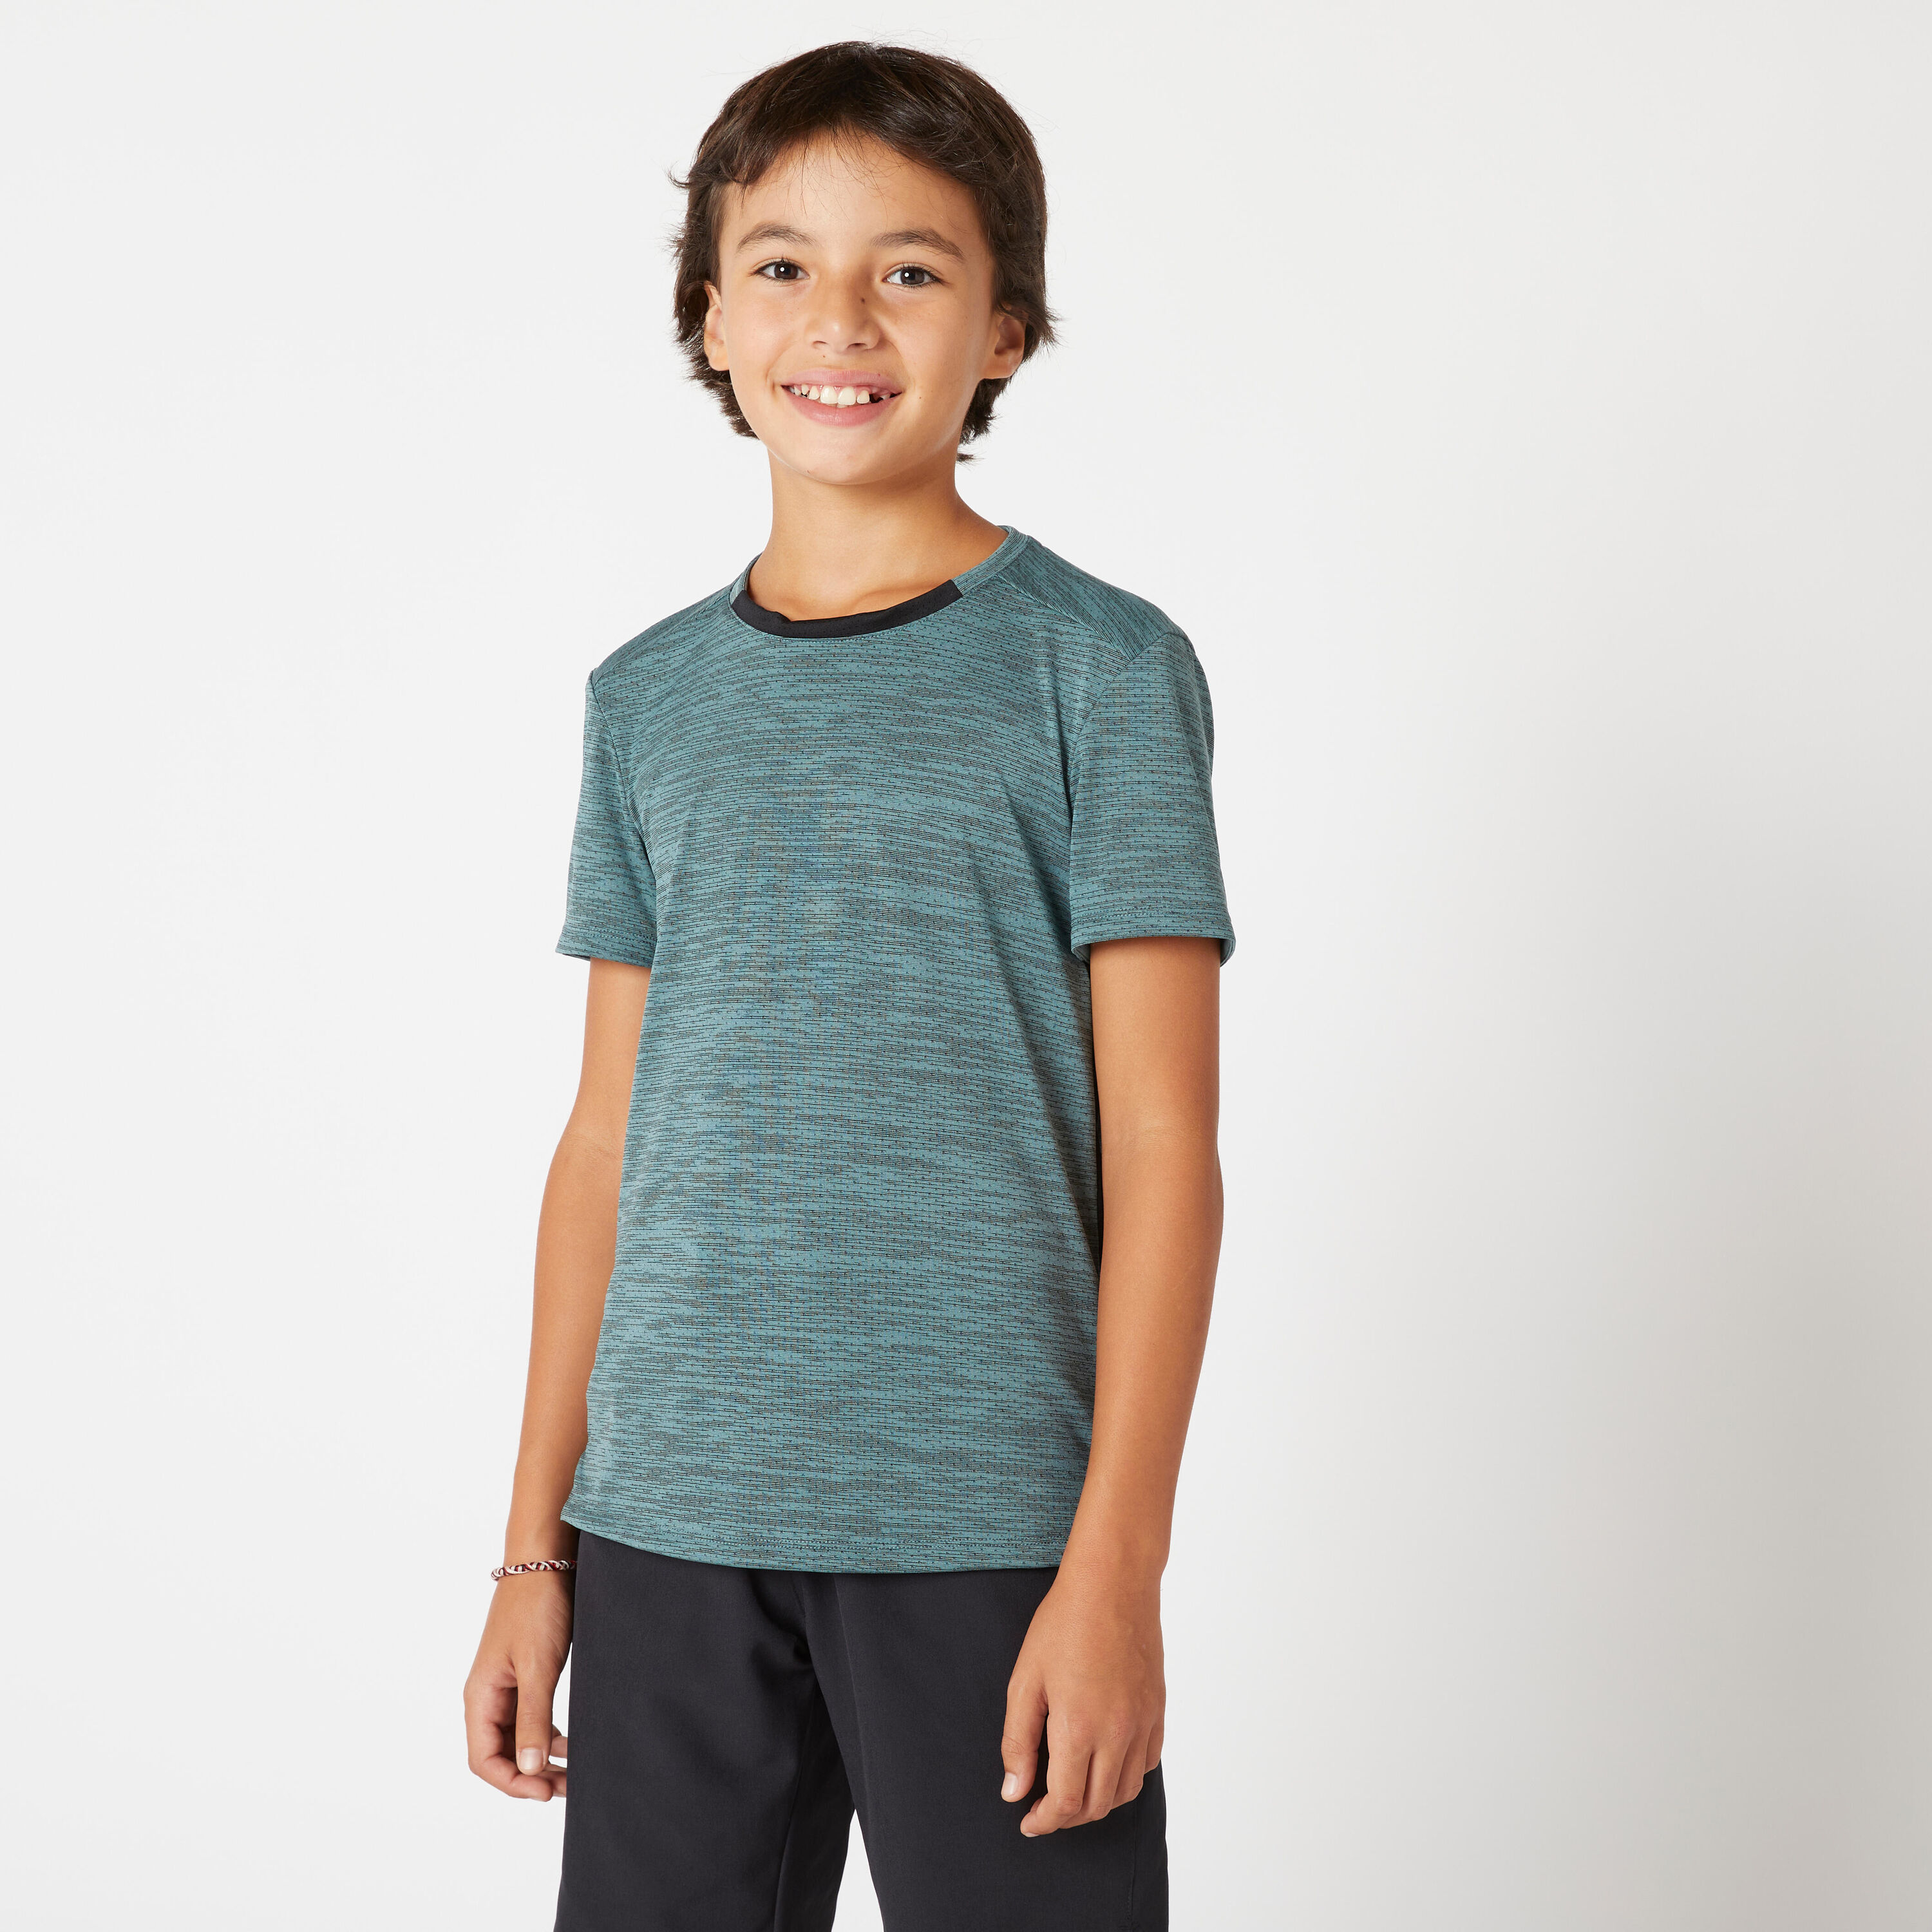 DOMYOS Kids' Synthetic Breathable T-Shirt S500 - Khaki